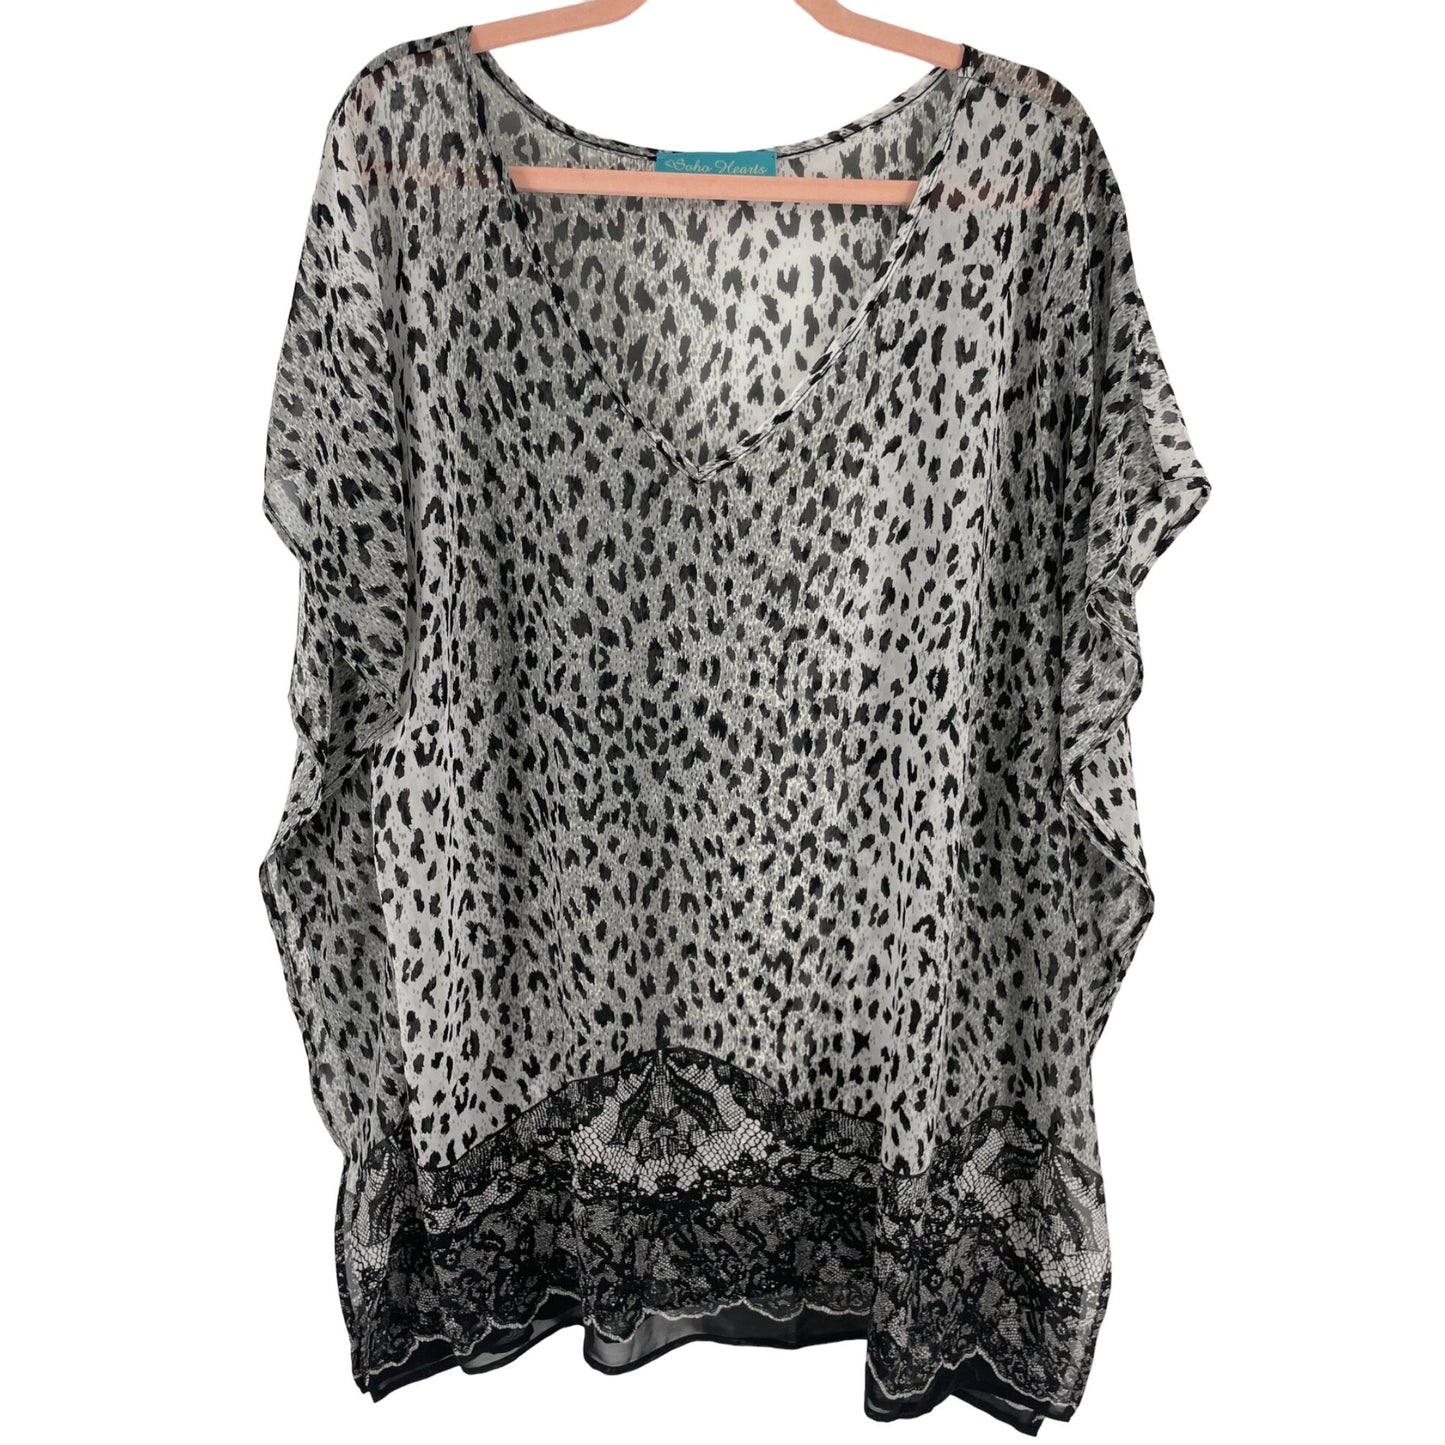 Soho Hearts Women's Size XL Black & White Leopard Print Lace Beach Cover-Up